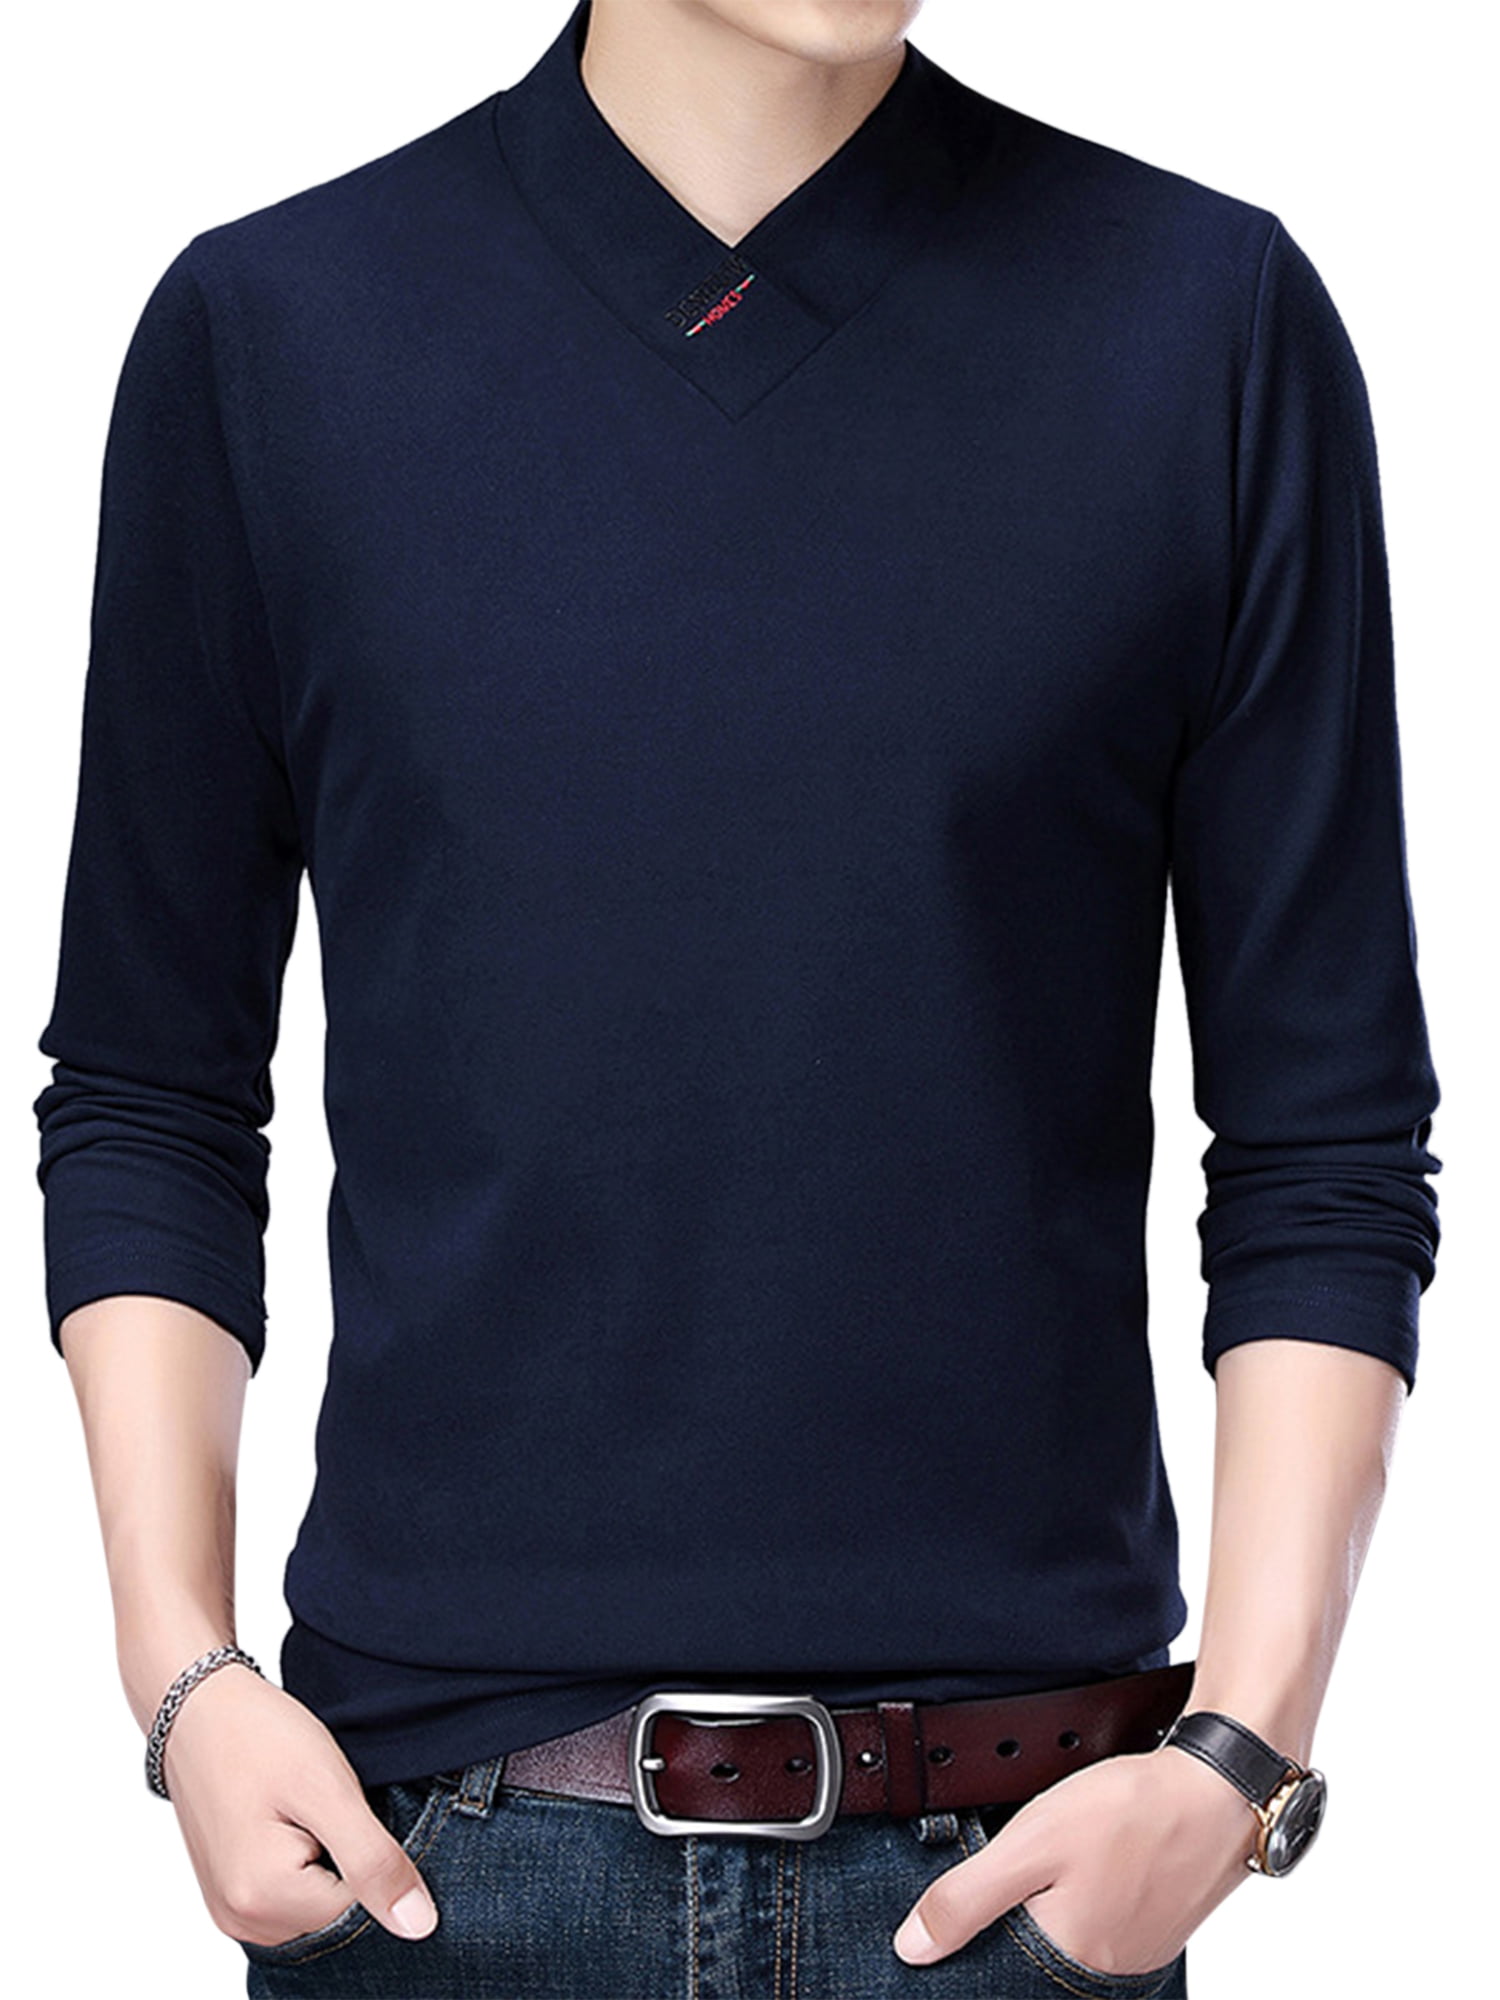 ZIMEGO Men’s Casual Long Sleeve Layered Cuff V-Neck Fashion Athletic T-Shirt Tee 